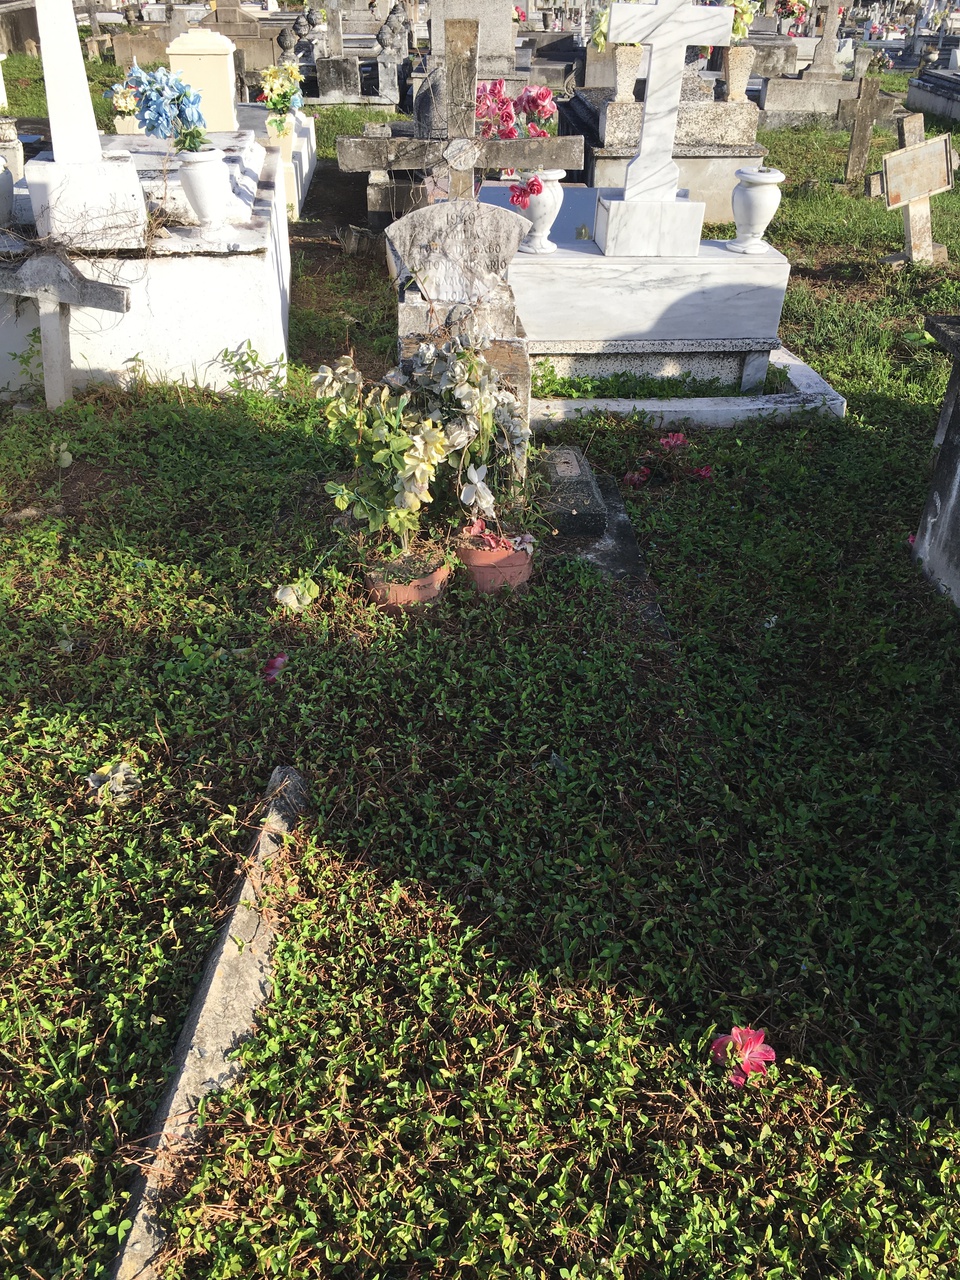 photo of grave